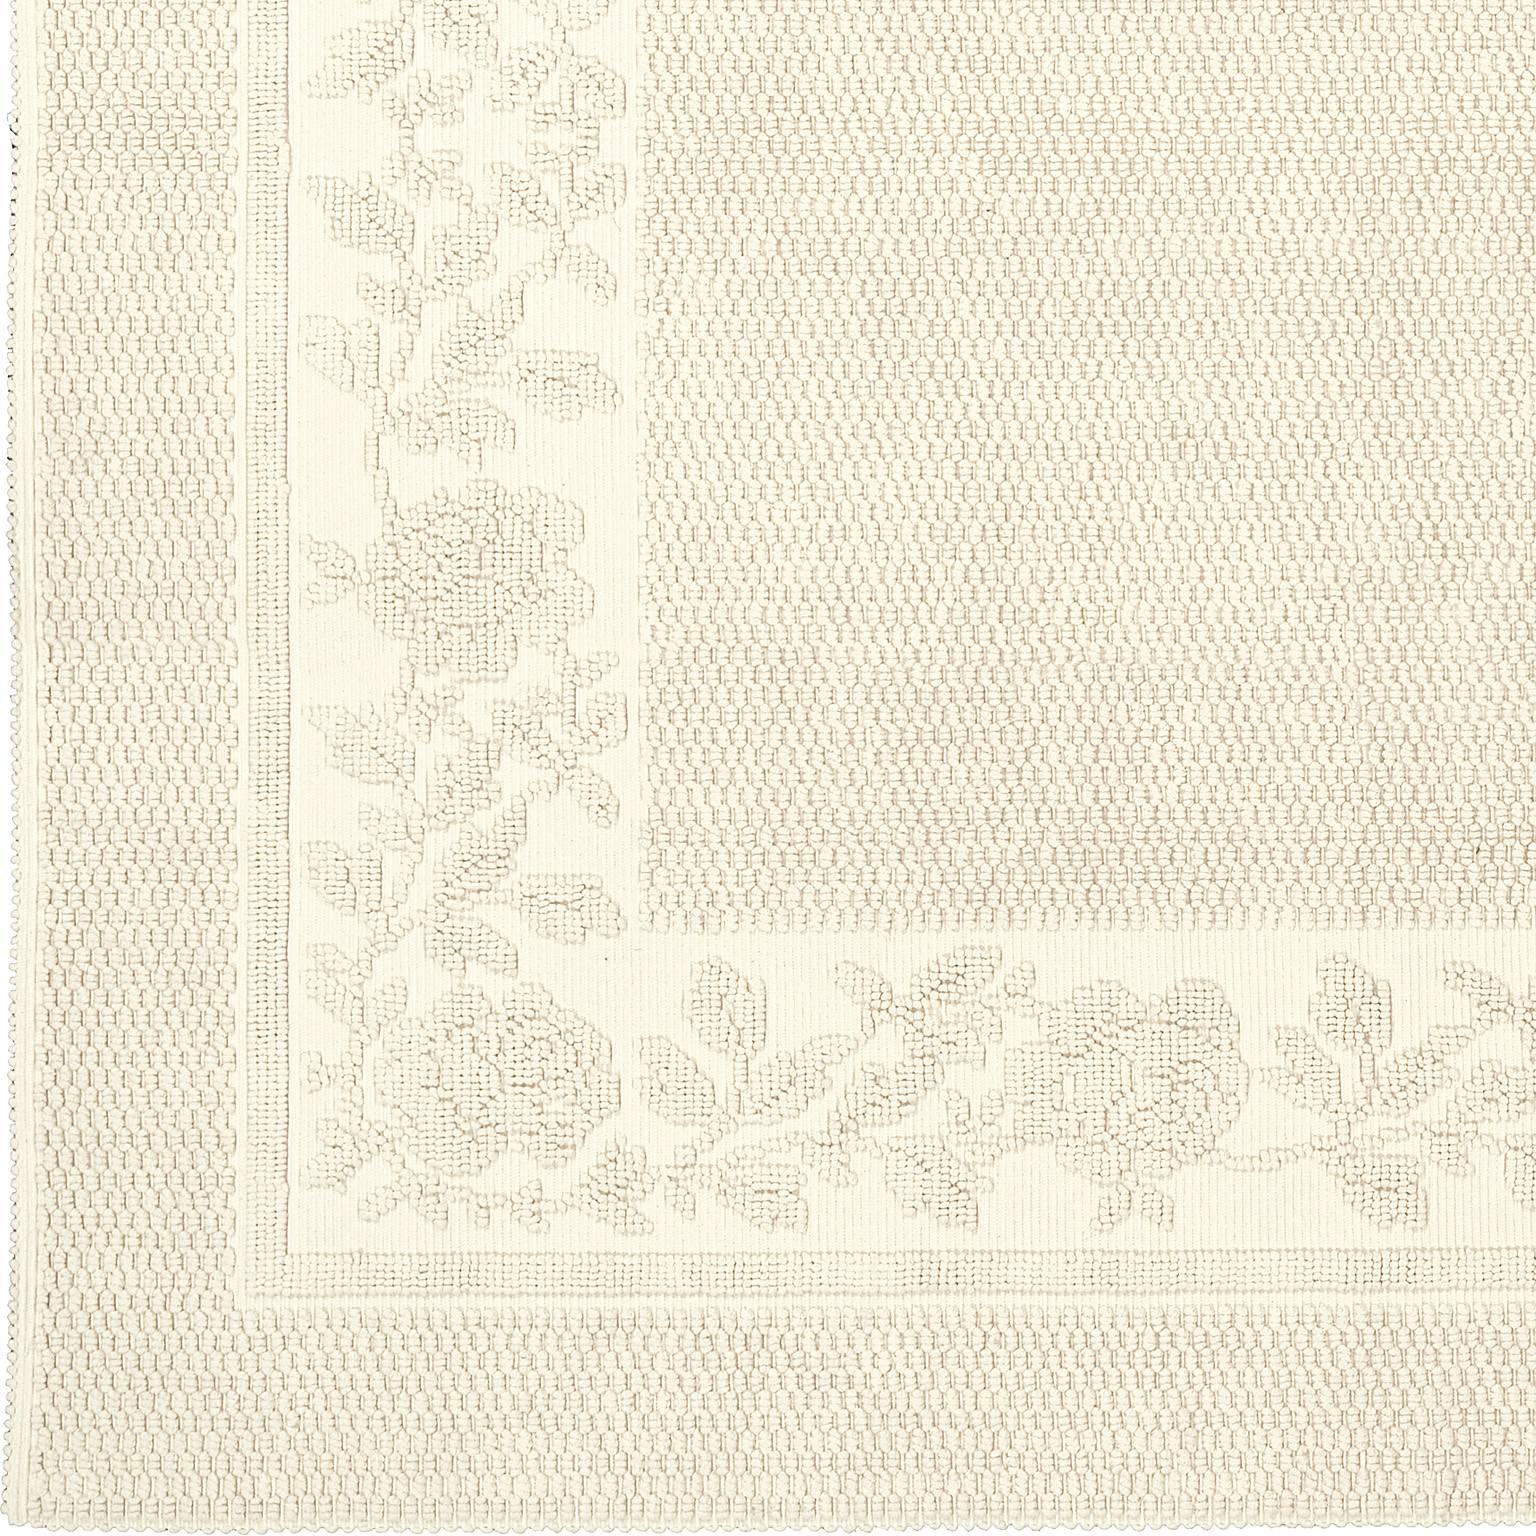 Contemporary Sardinian Carpet
100% Cotton
